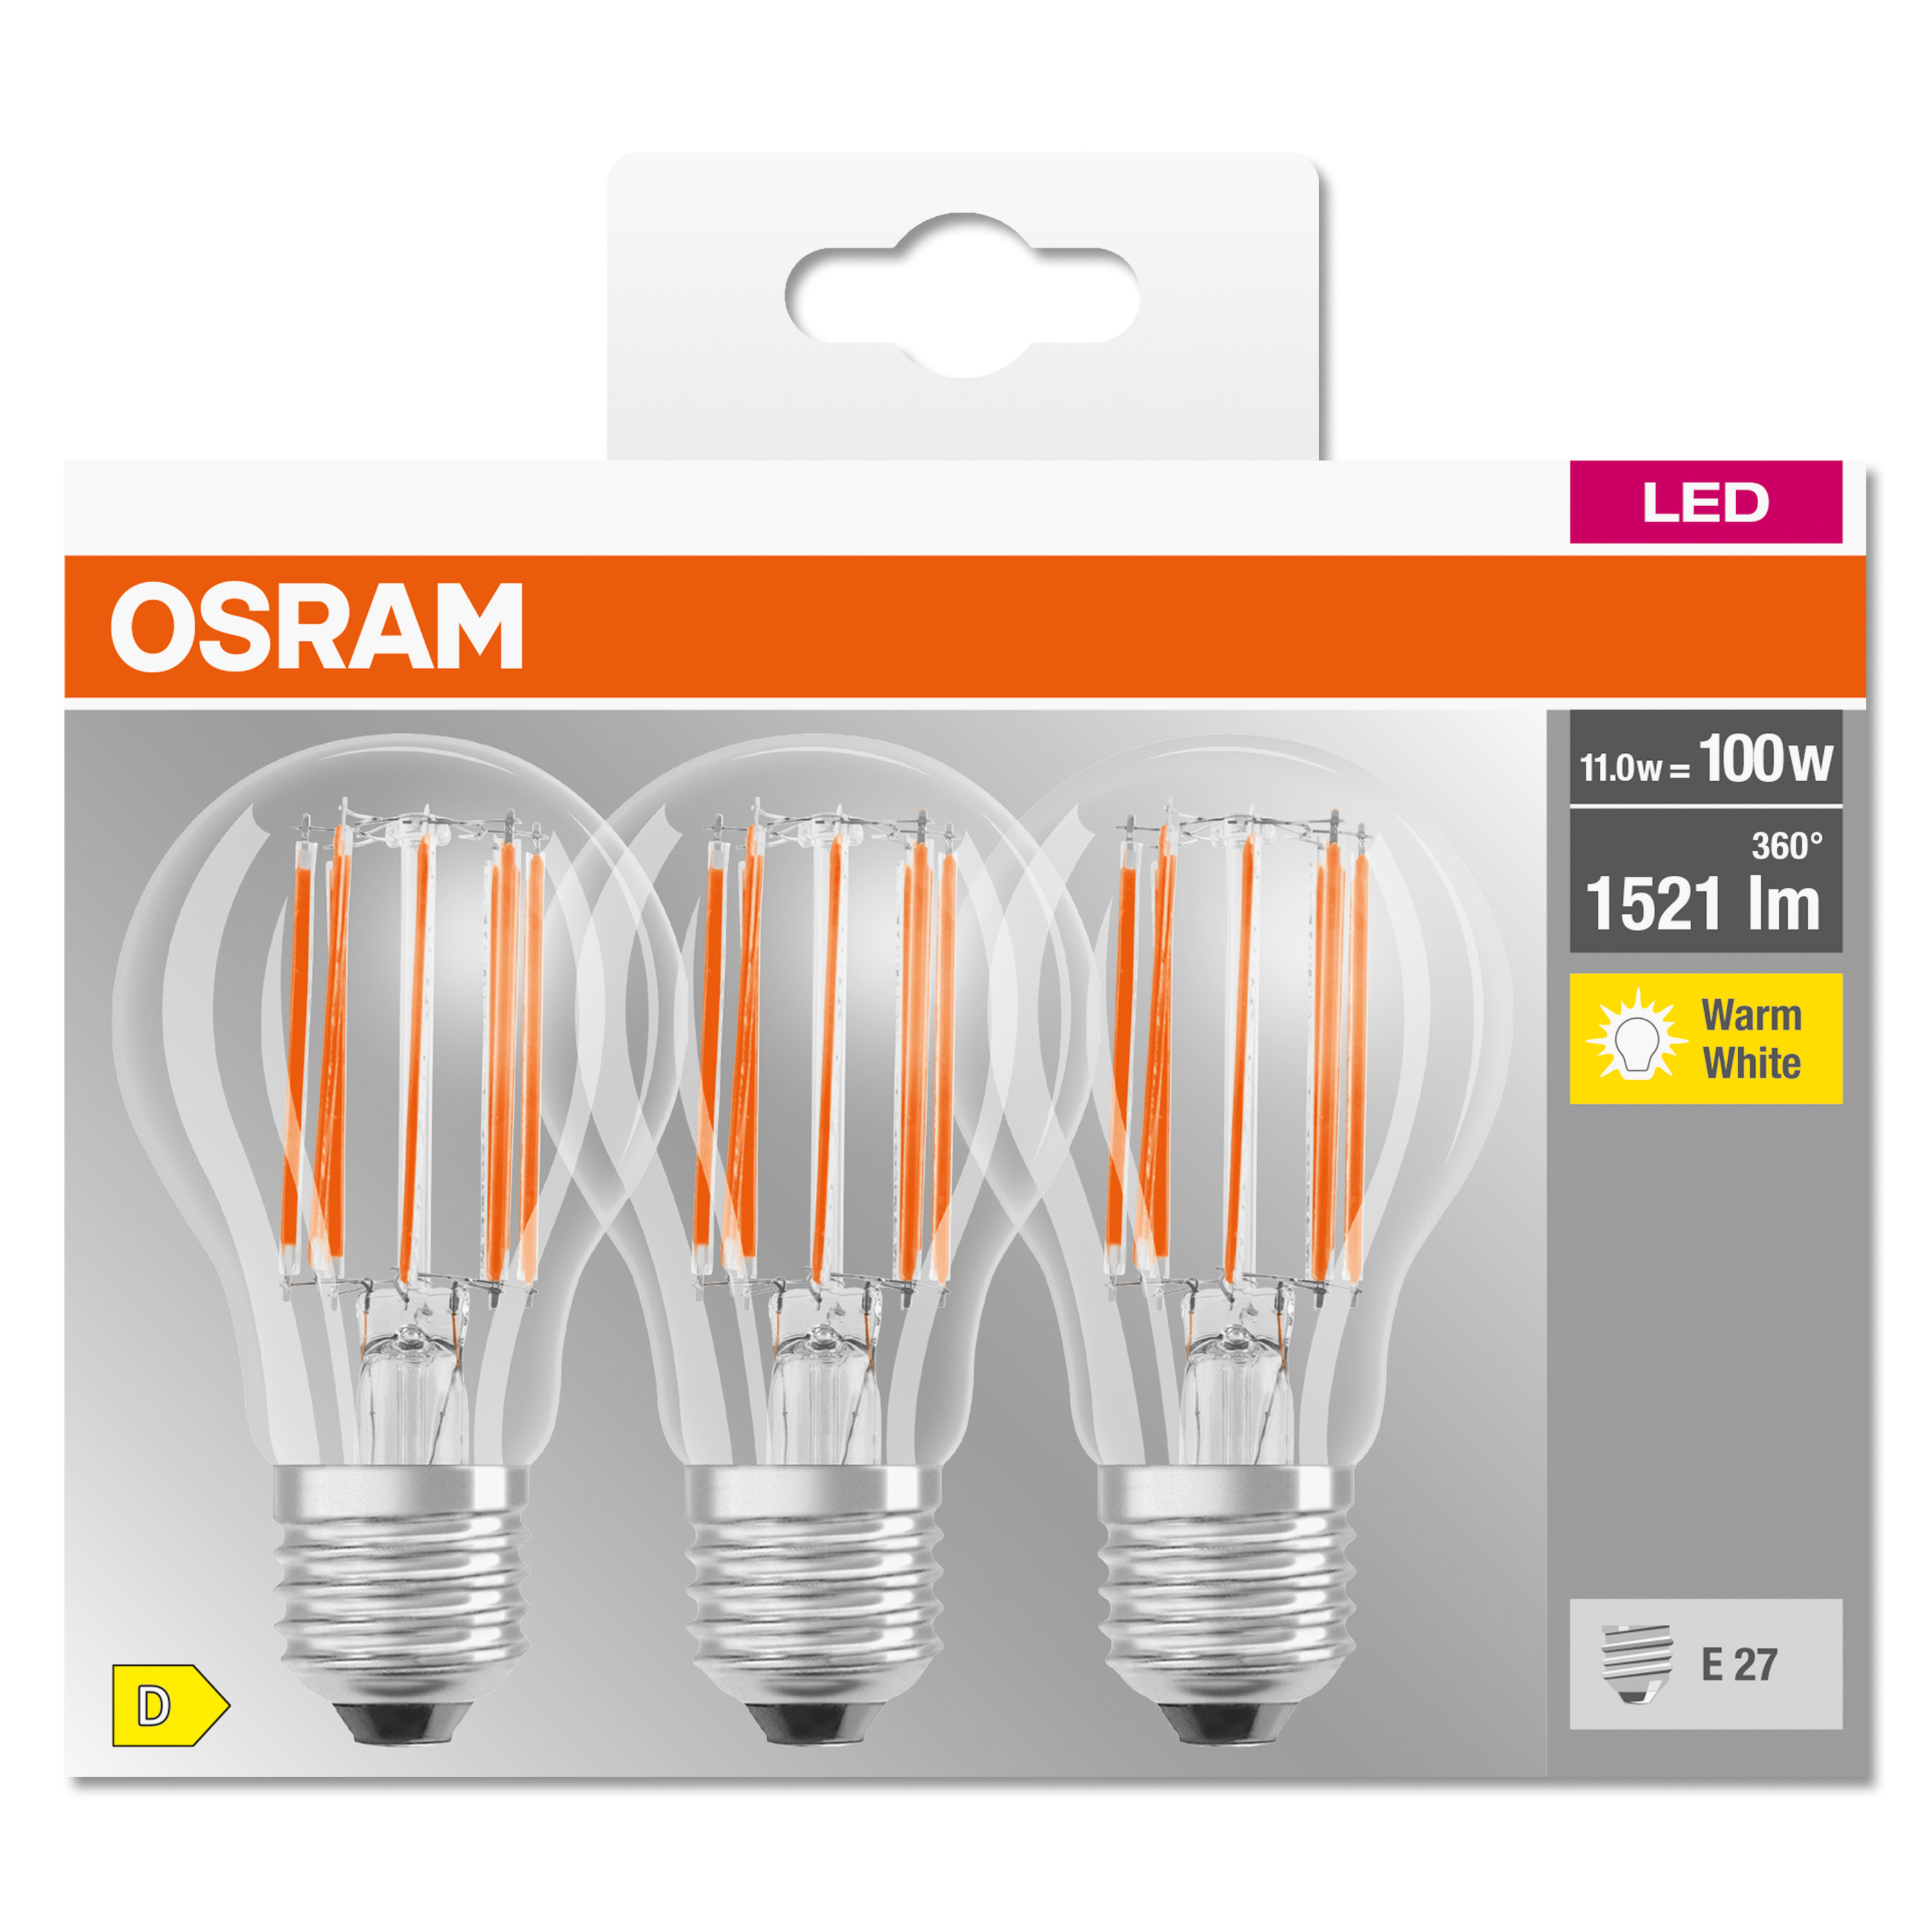 LED CLASSIC OSRAM  Lampe A lumen 1521 Warmweiß BASE LED